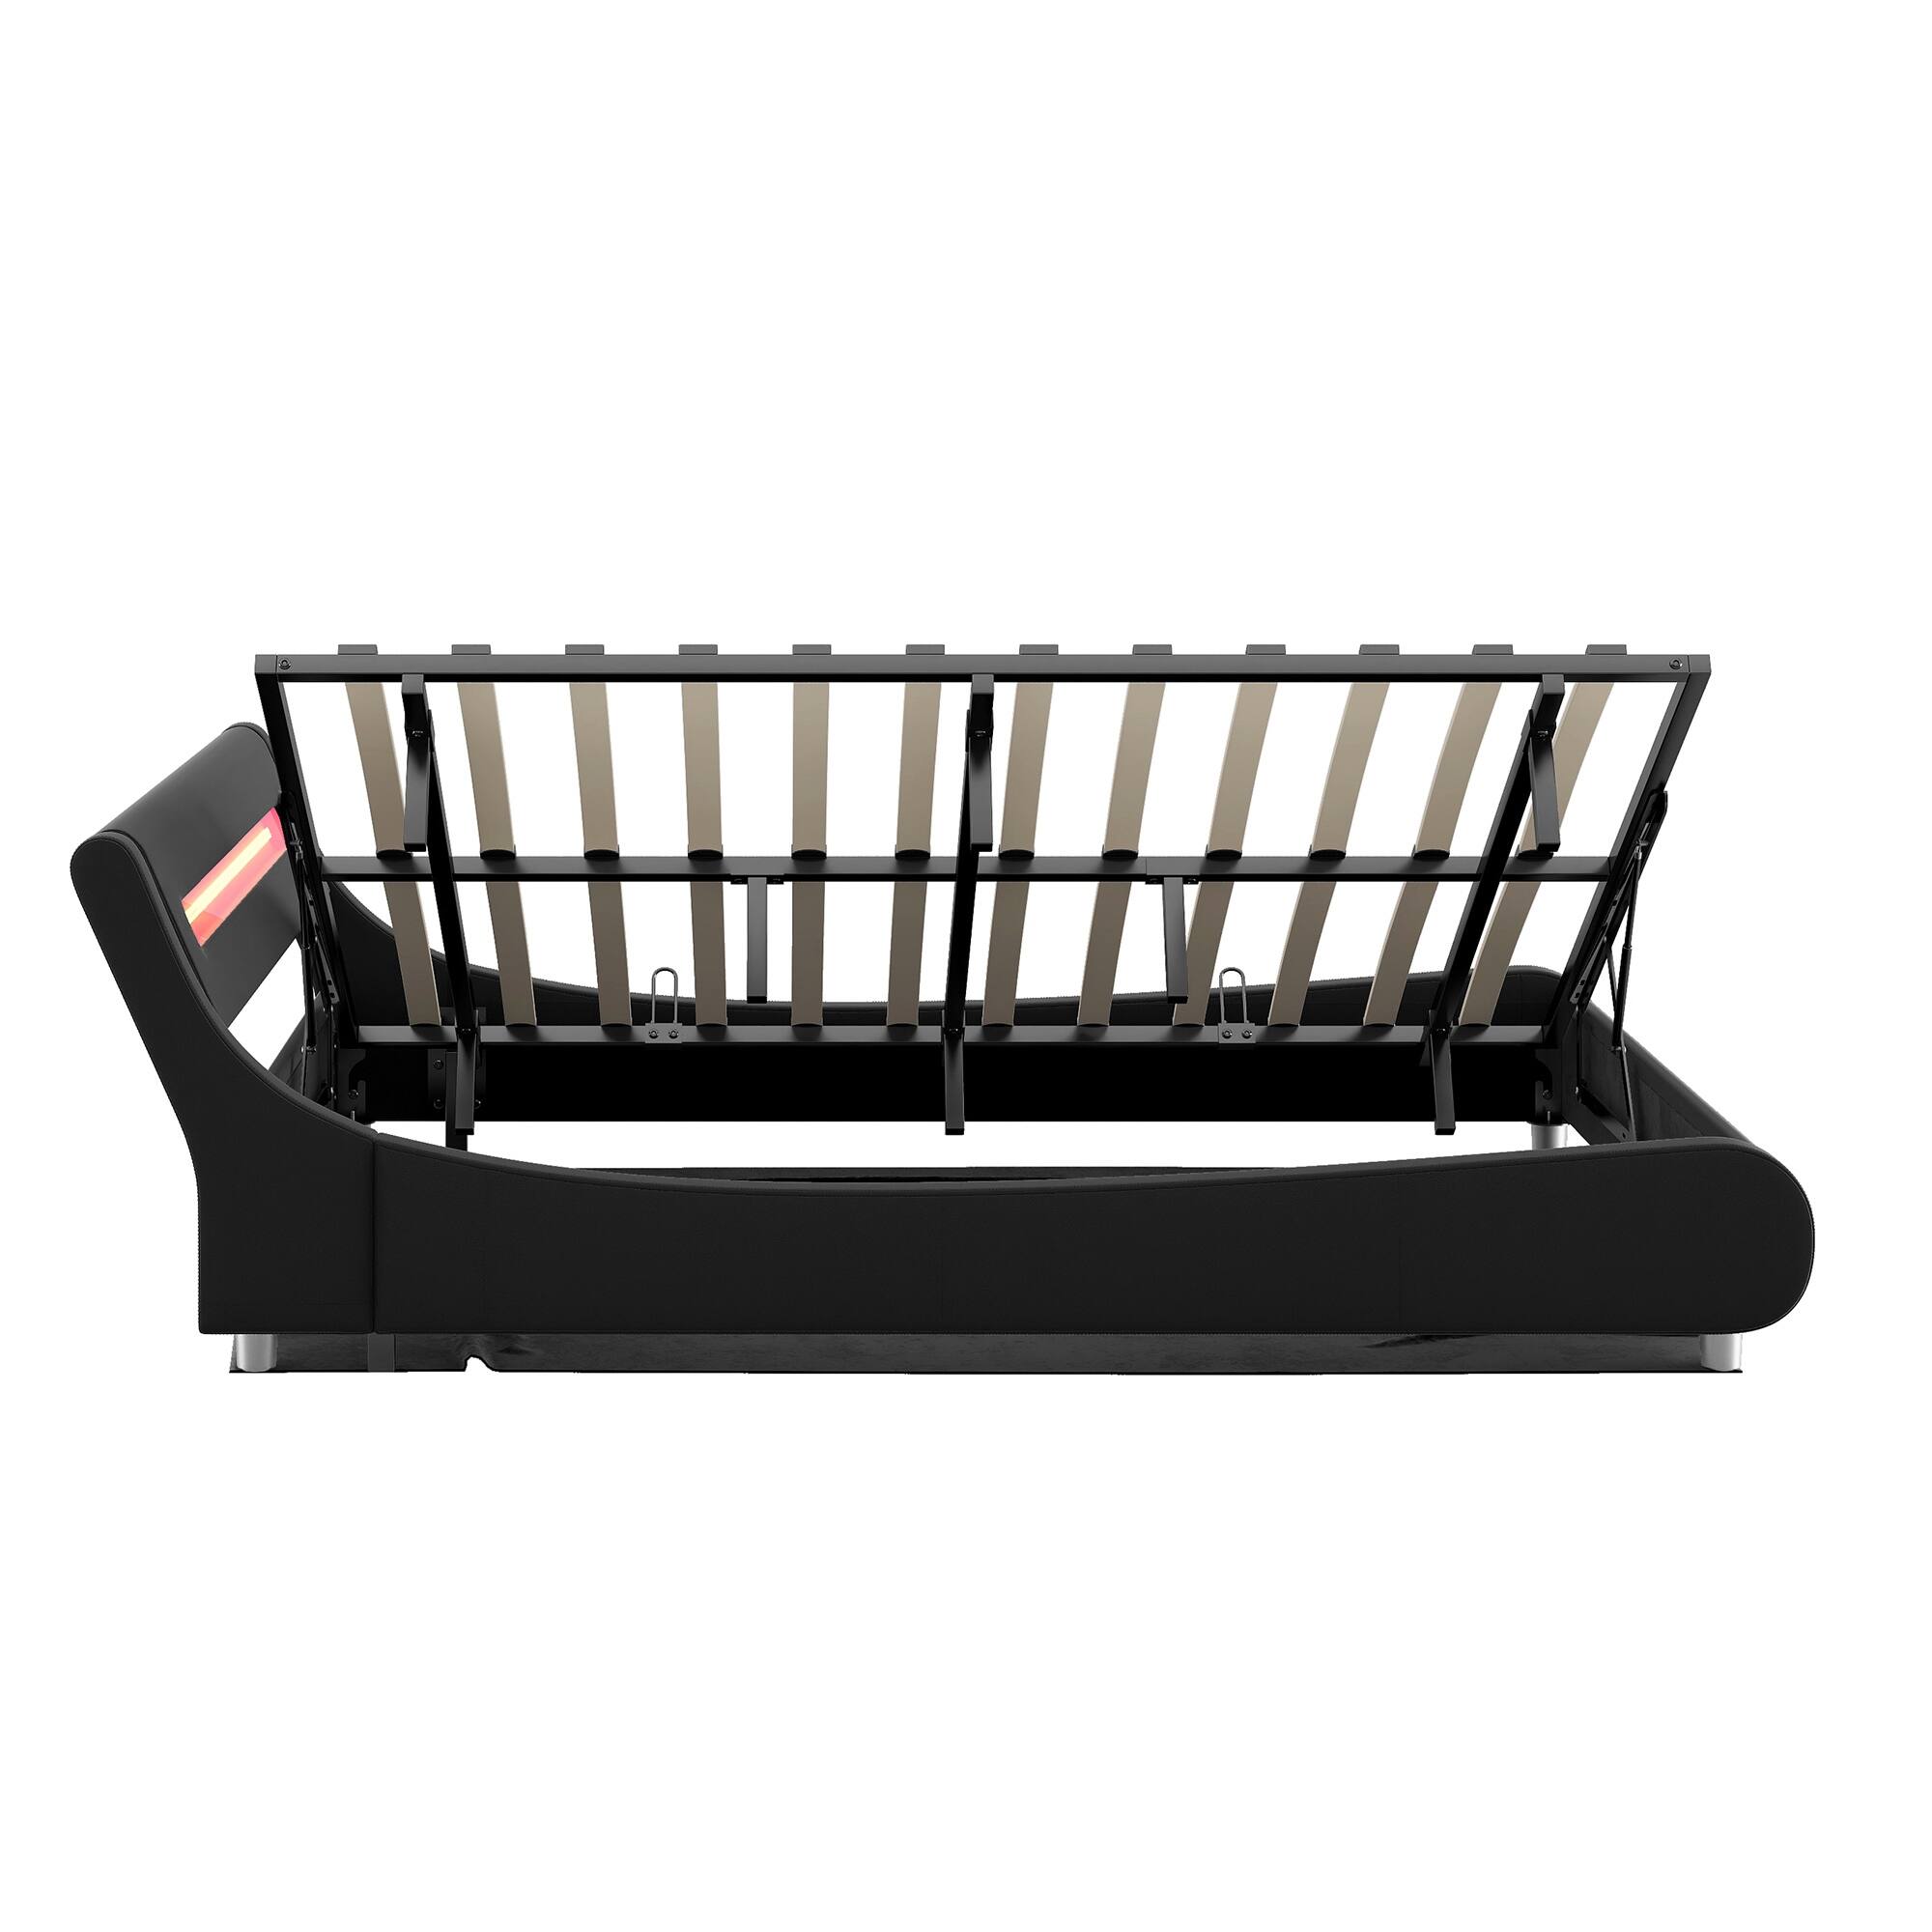 Upholstered Platform Bed with Storage & LED Lights Headboard Low Profile Lift Up Storage Beds, Side Lifting